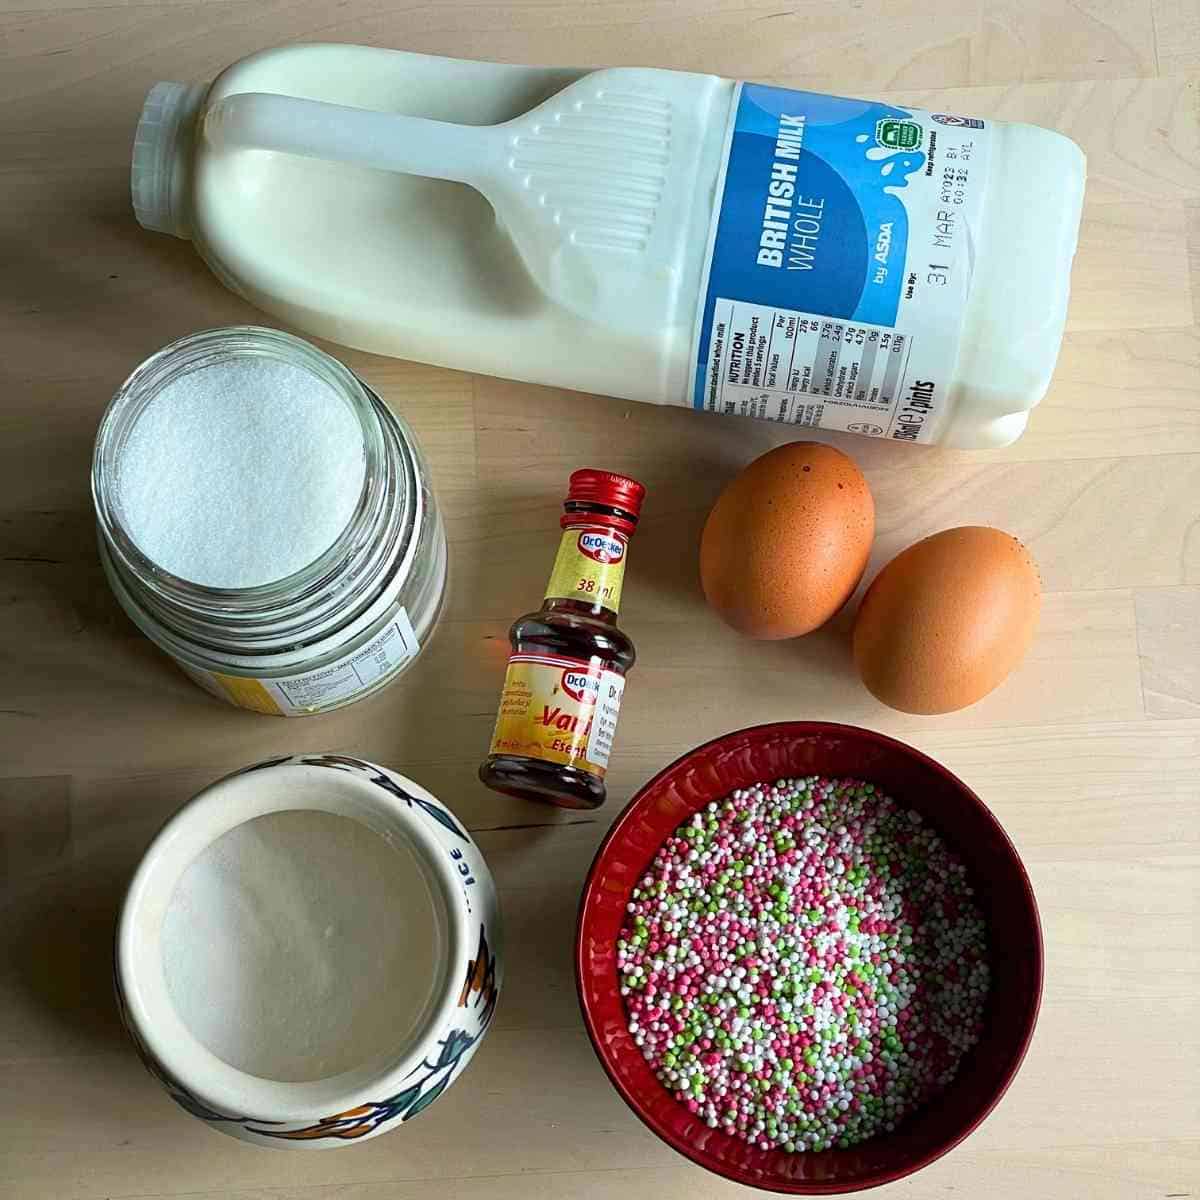 Tapioca pudding ingredients